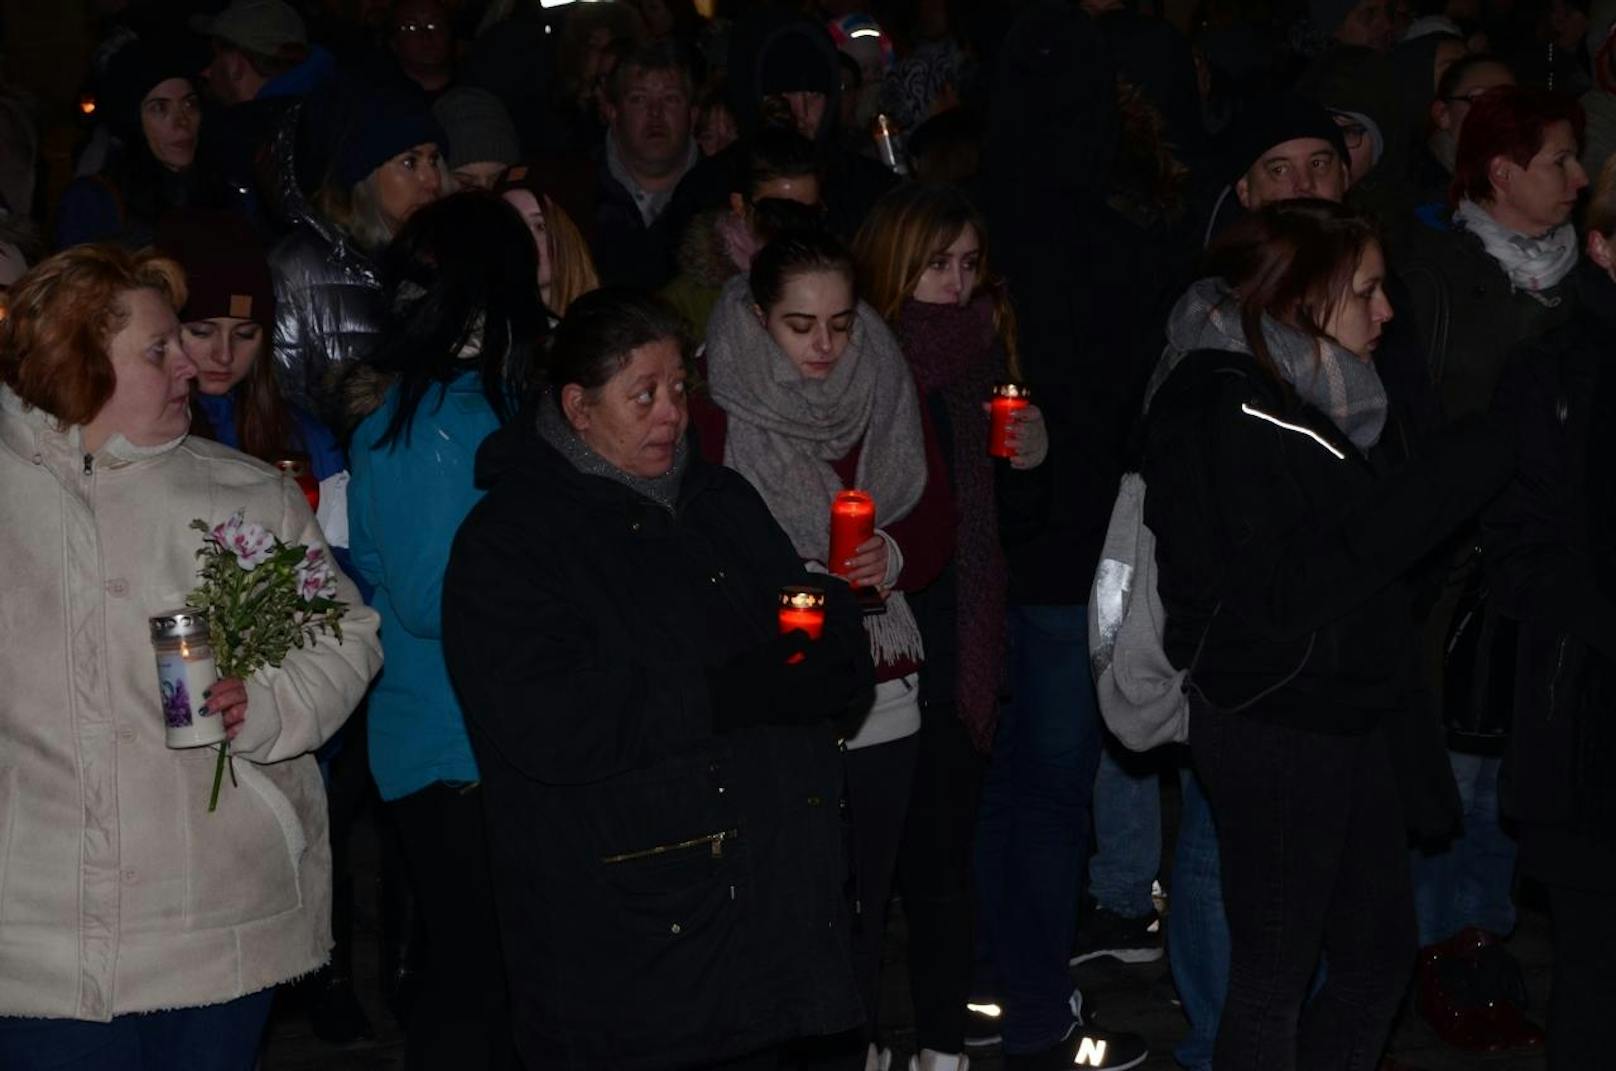 Am Hauptplatz legten die Menschen Kerzen ab bzw. entzündeten Kerzen.